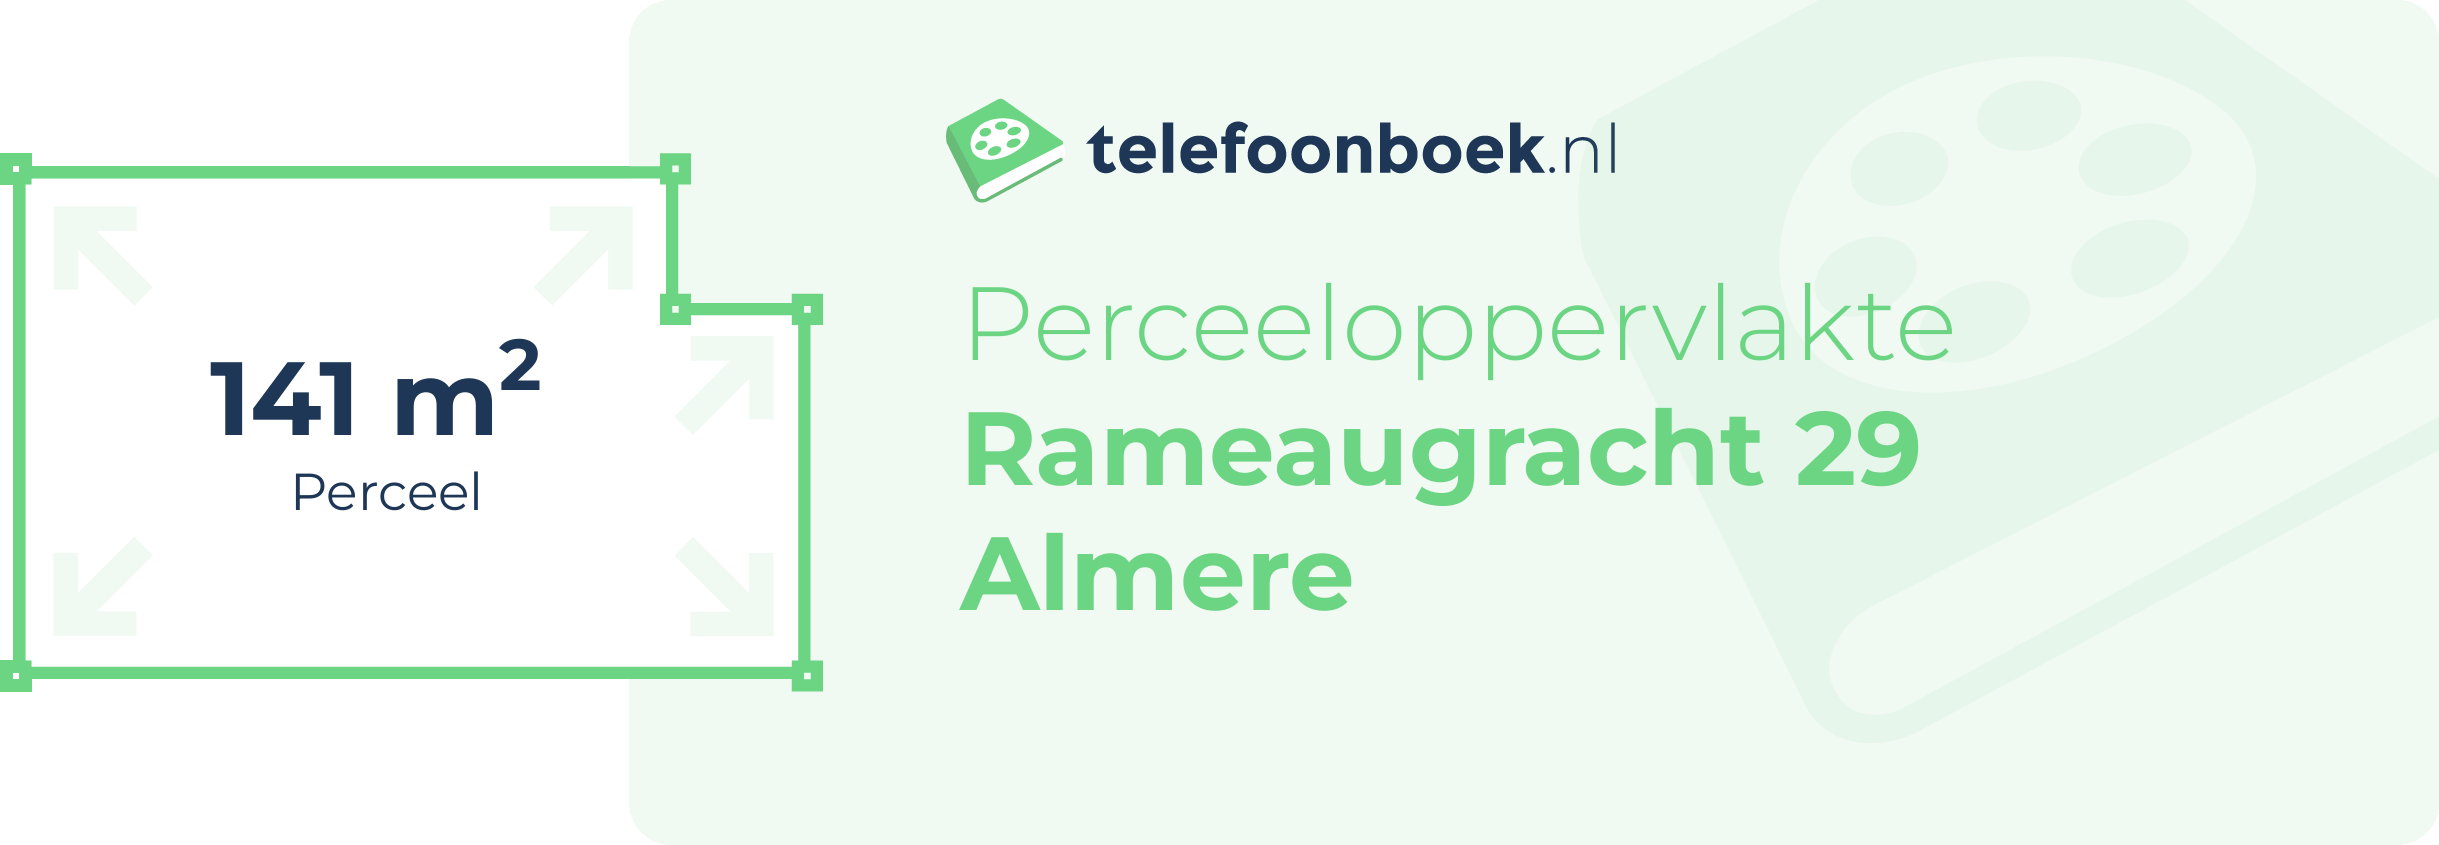 Perceeloppervlakte Rameaugracht 29 Almere